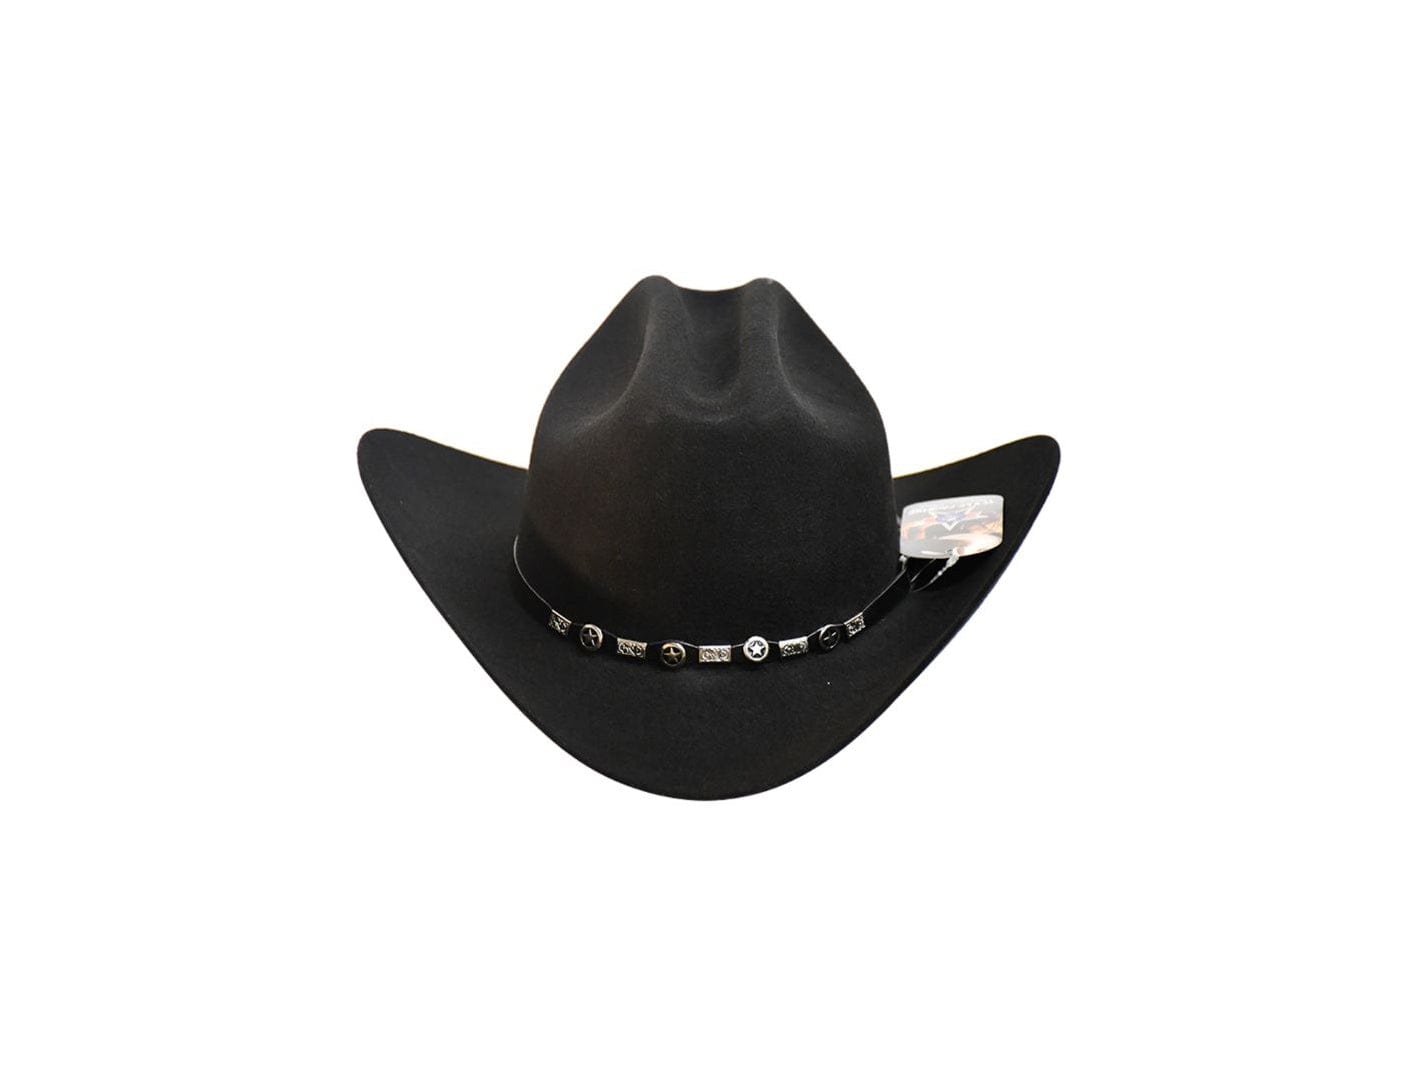 Exclusive "Sinaloa" Texas Country Western Felt Cowboy Hat Black